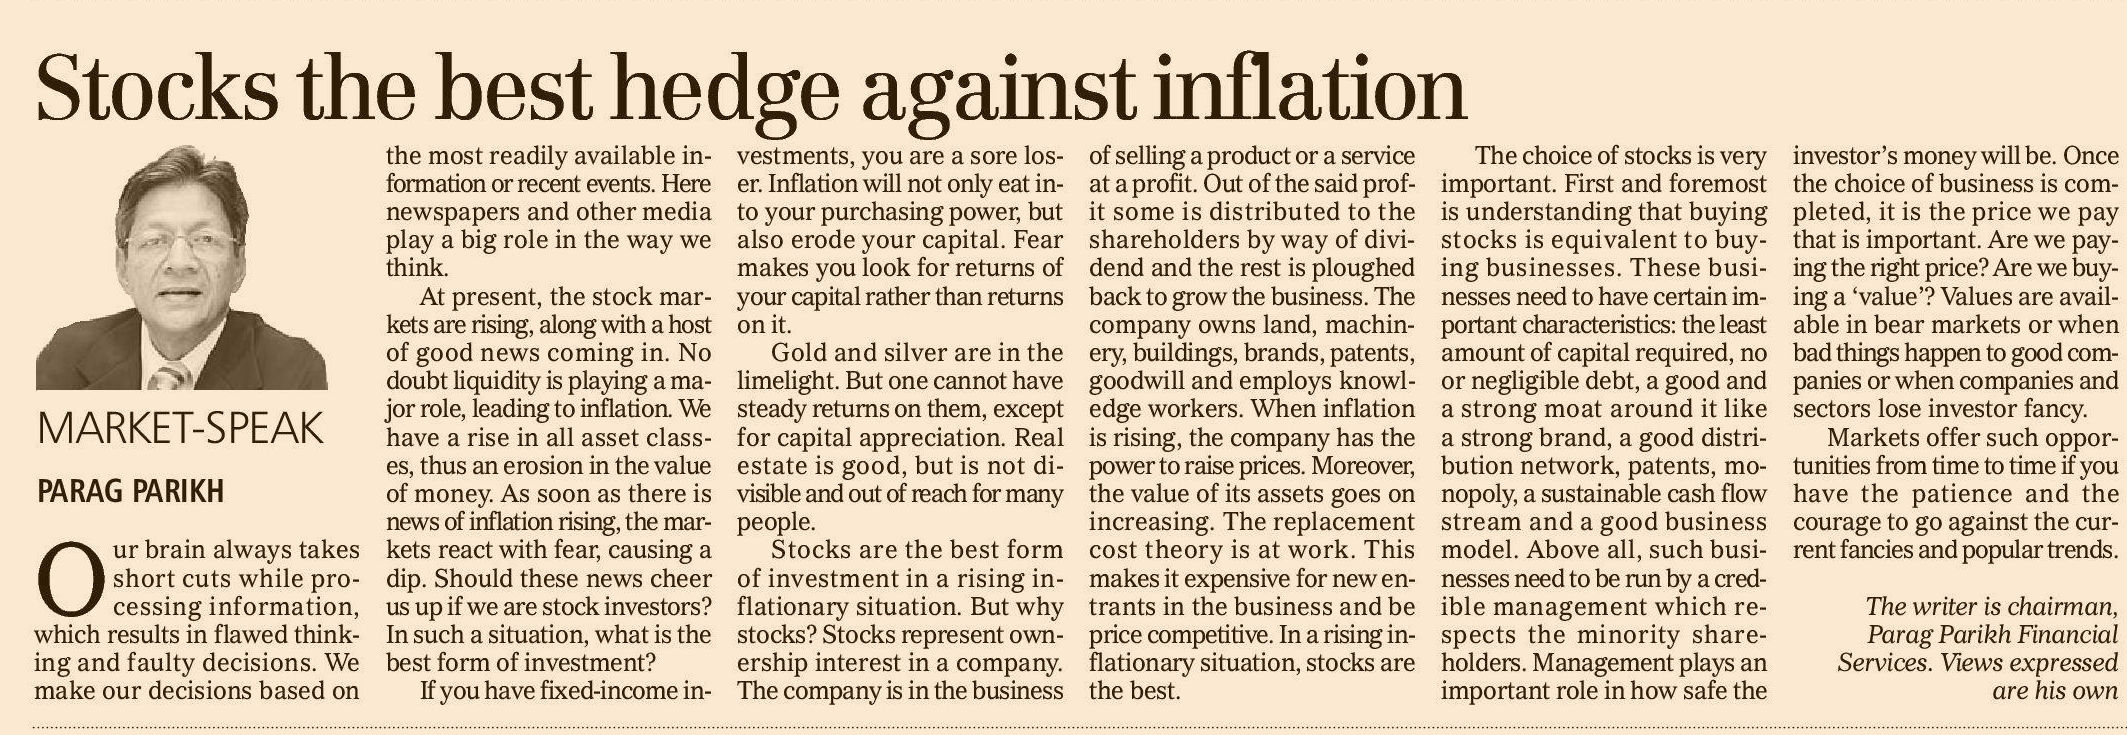 Stocks the Best hedge against Inflation - Parag Parikh